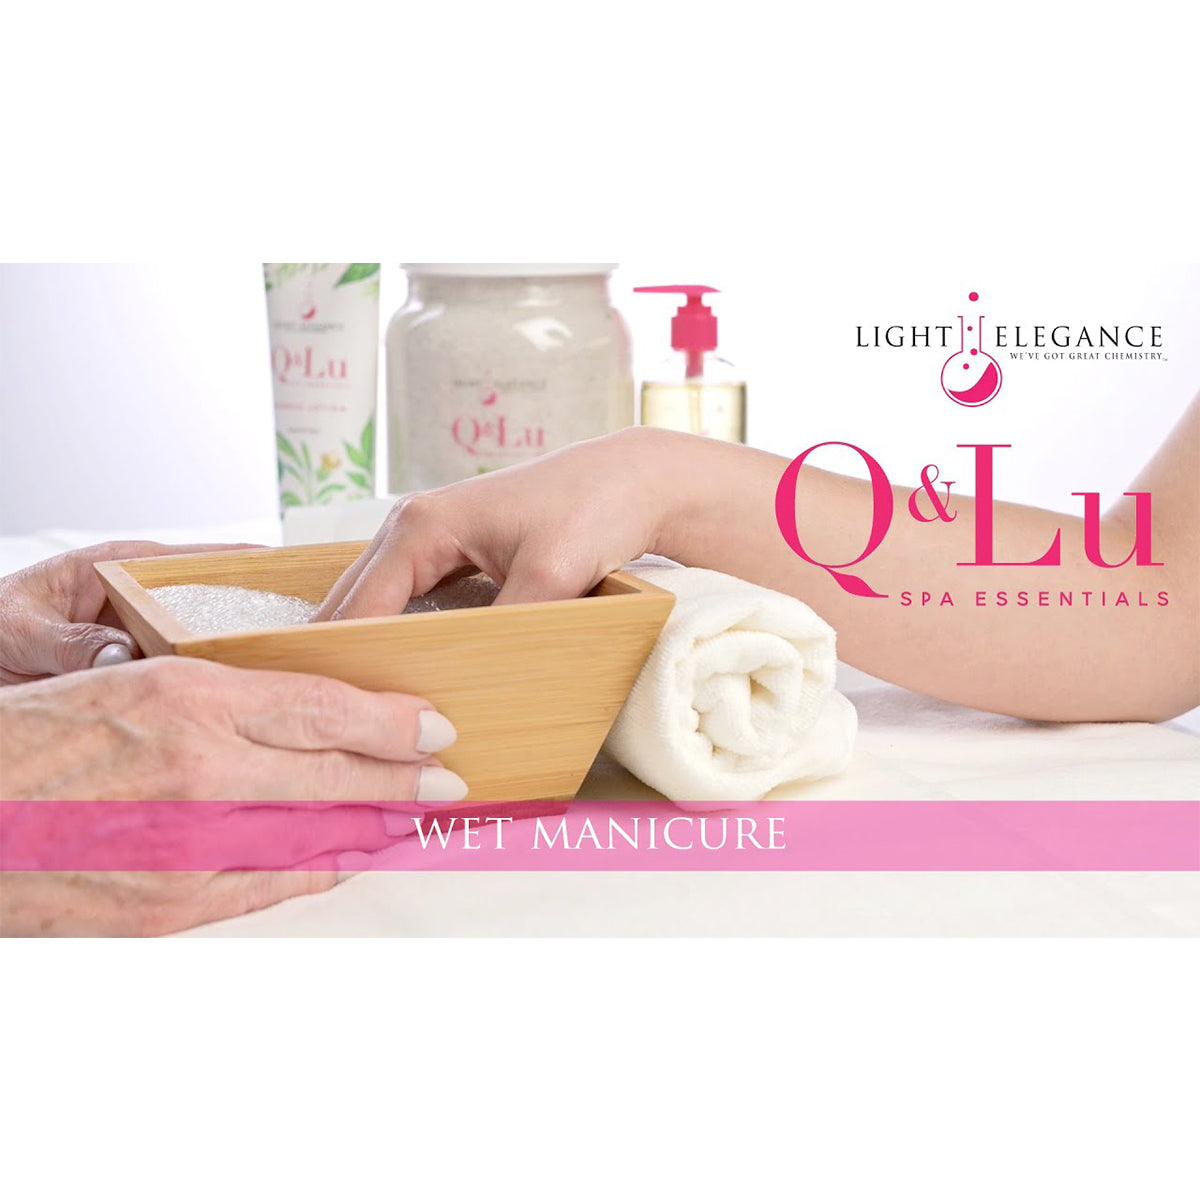 Wet Manicure Step-by-Step using Q&Lu Spa Essentials